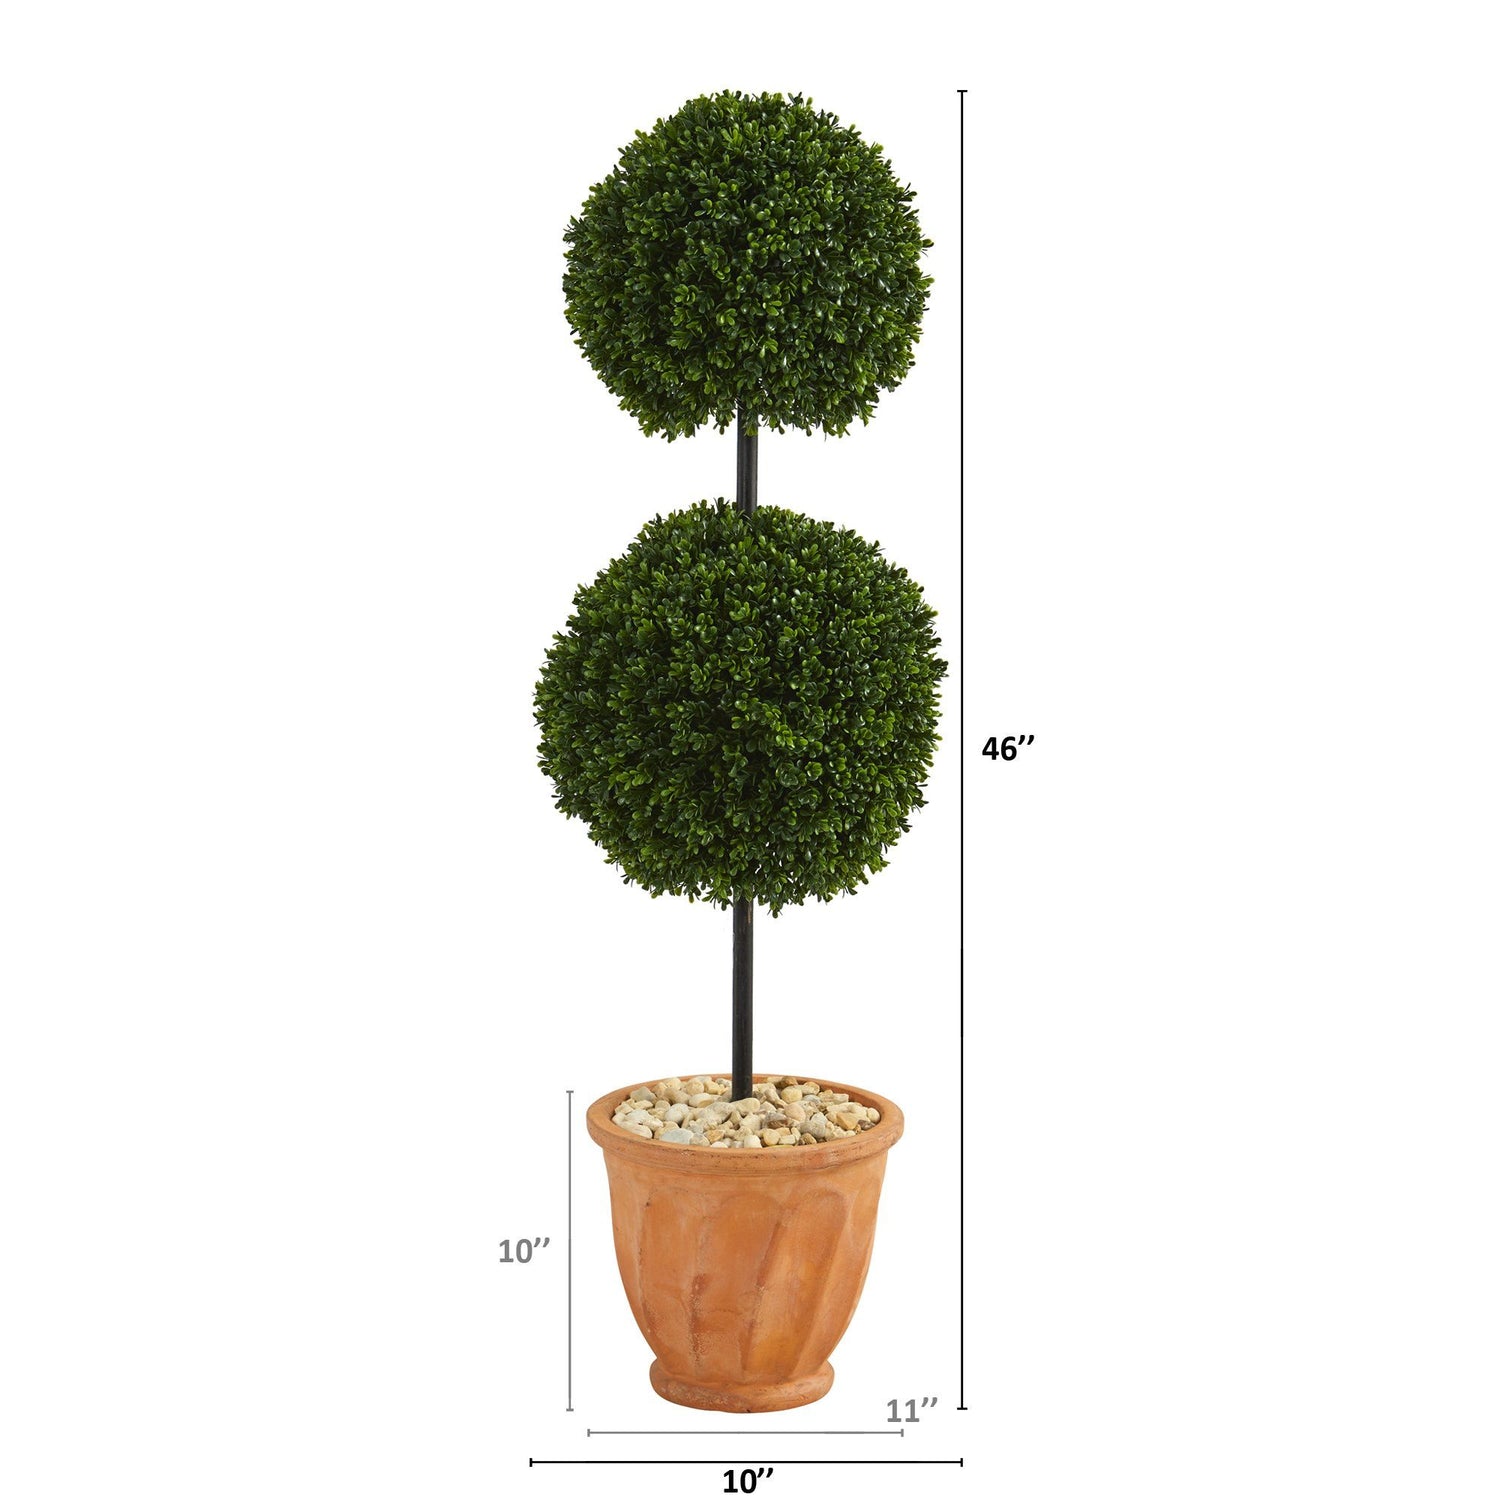 46” Boxwood Double Ball Artificial Topiary Tree in Terra-Cotta Planter (Indoor/Outdoor)